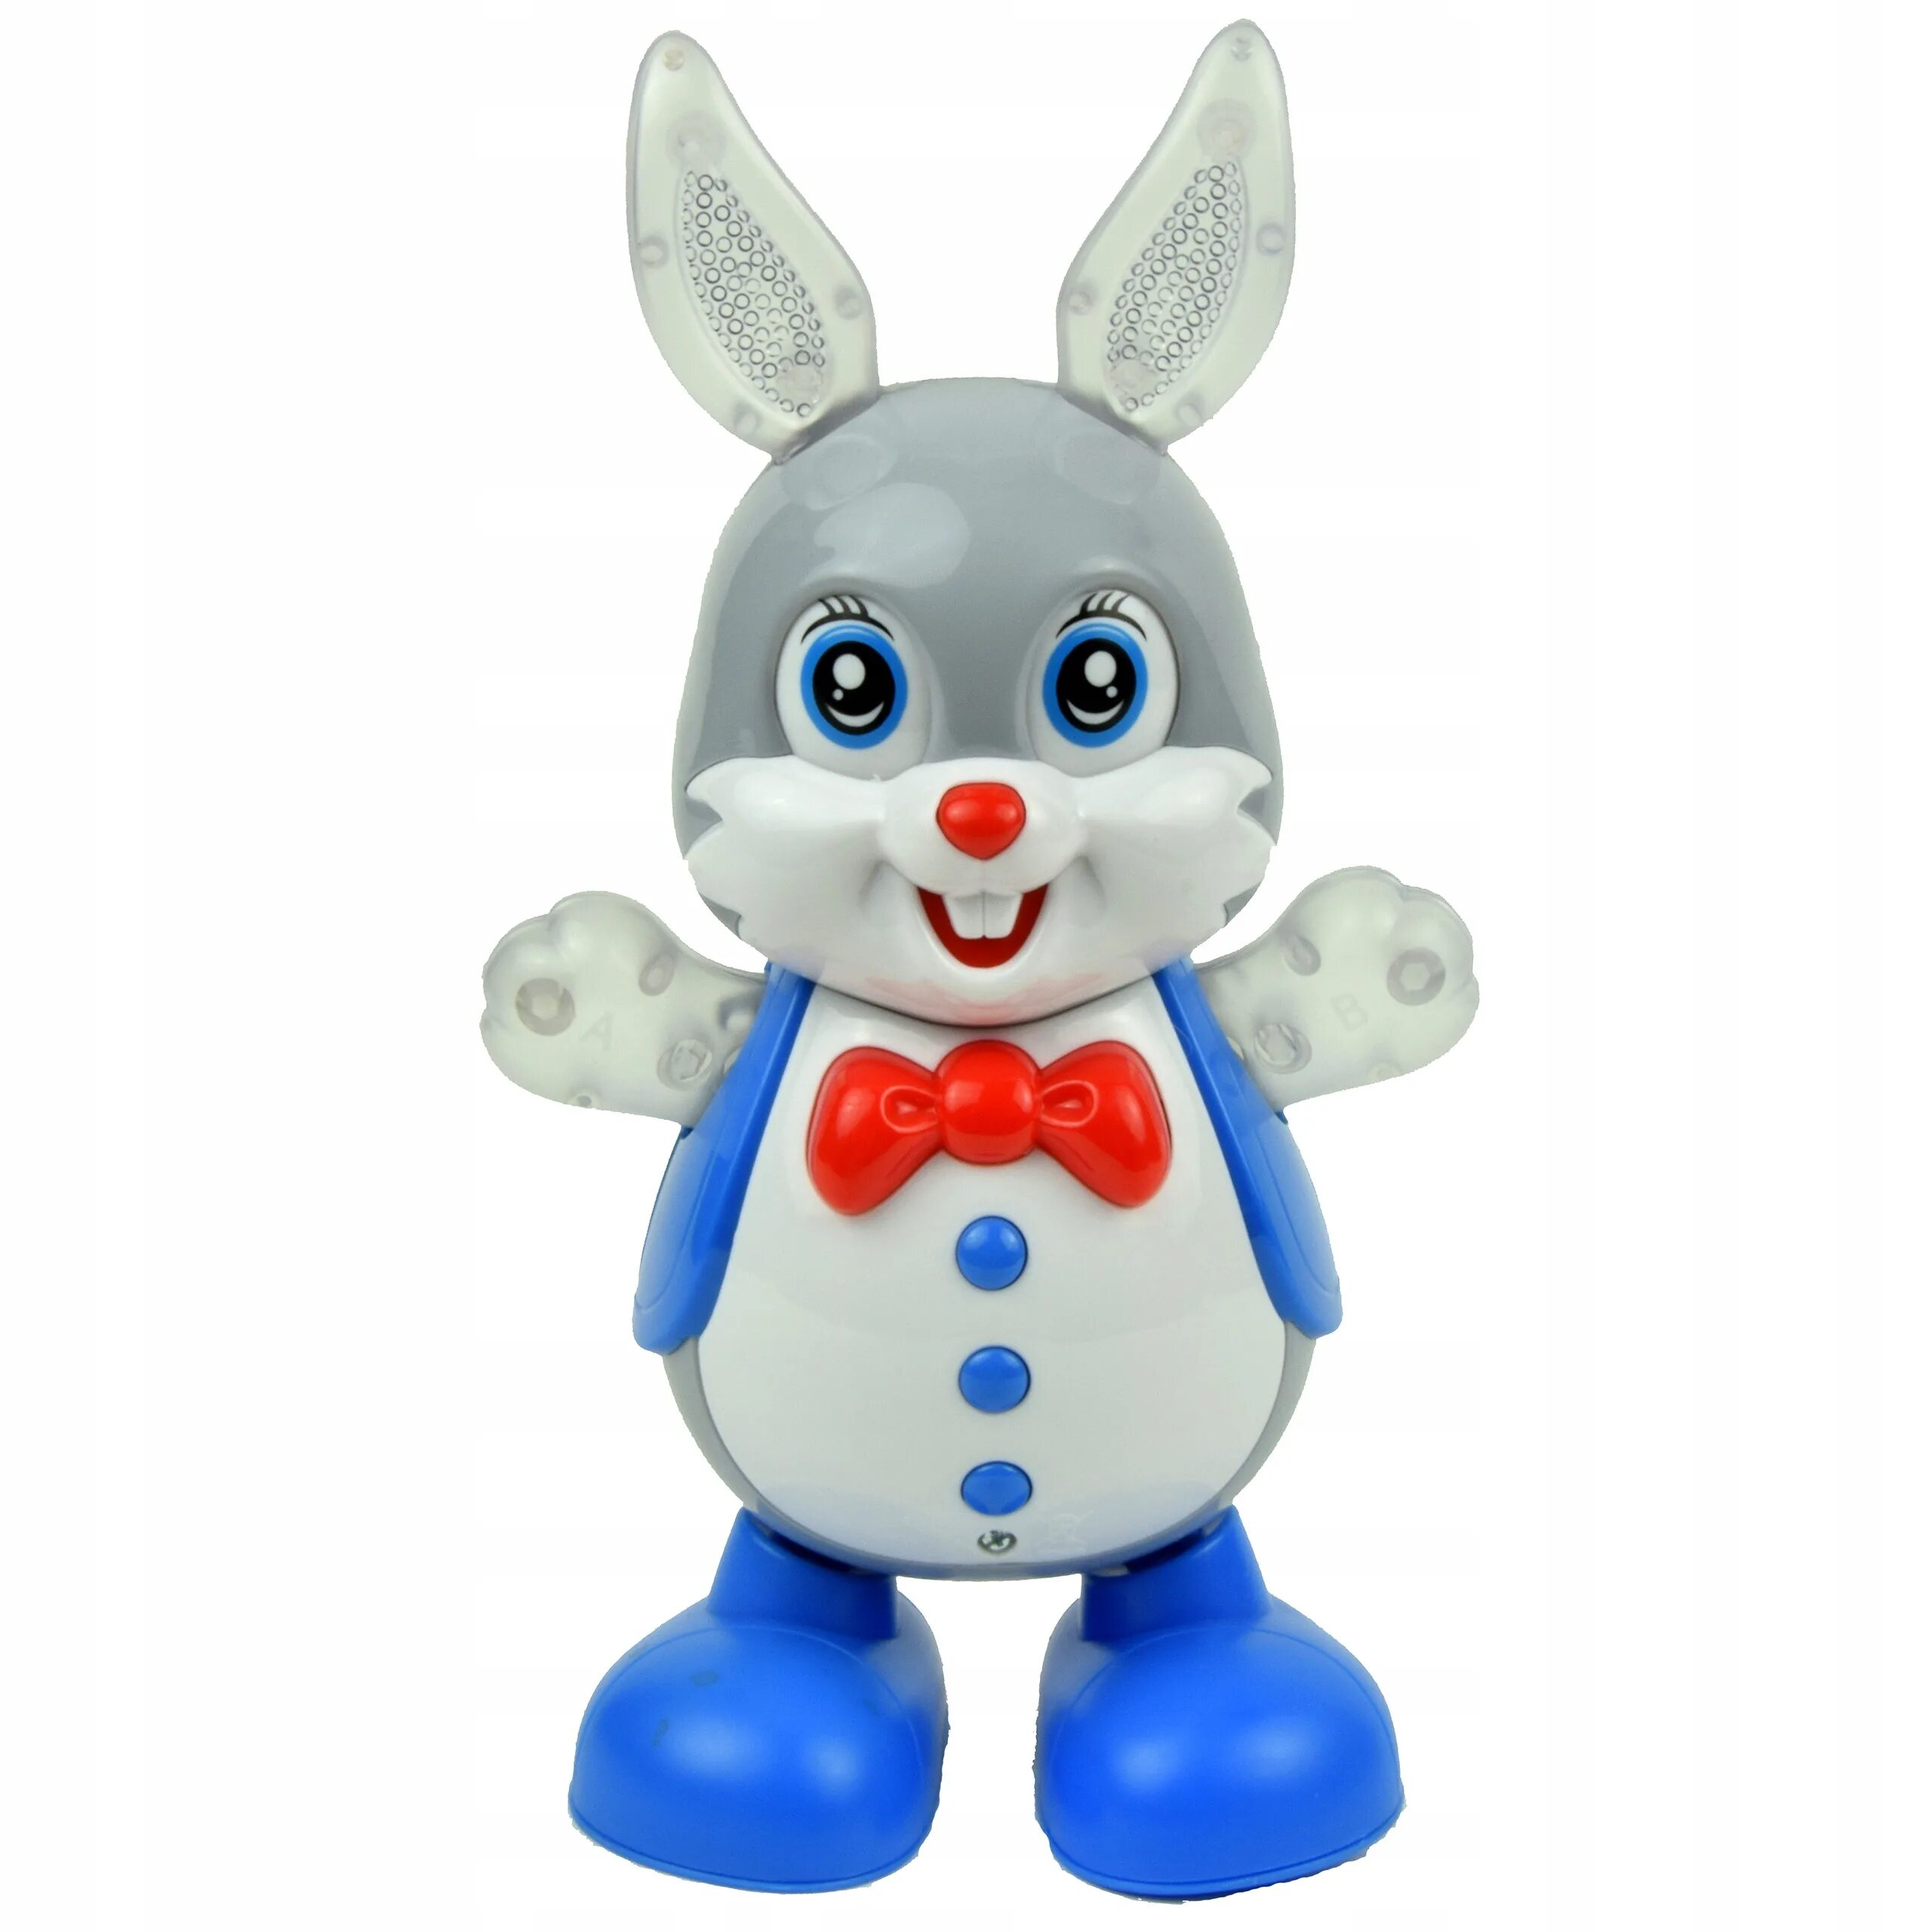 Интерактивные игрушки для малышей. Интерактивный заяц игрушка. Танцующий зайчик игрушка. Игрушка Dancing Rabbit.